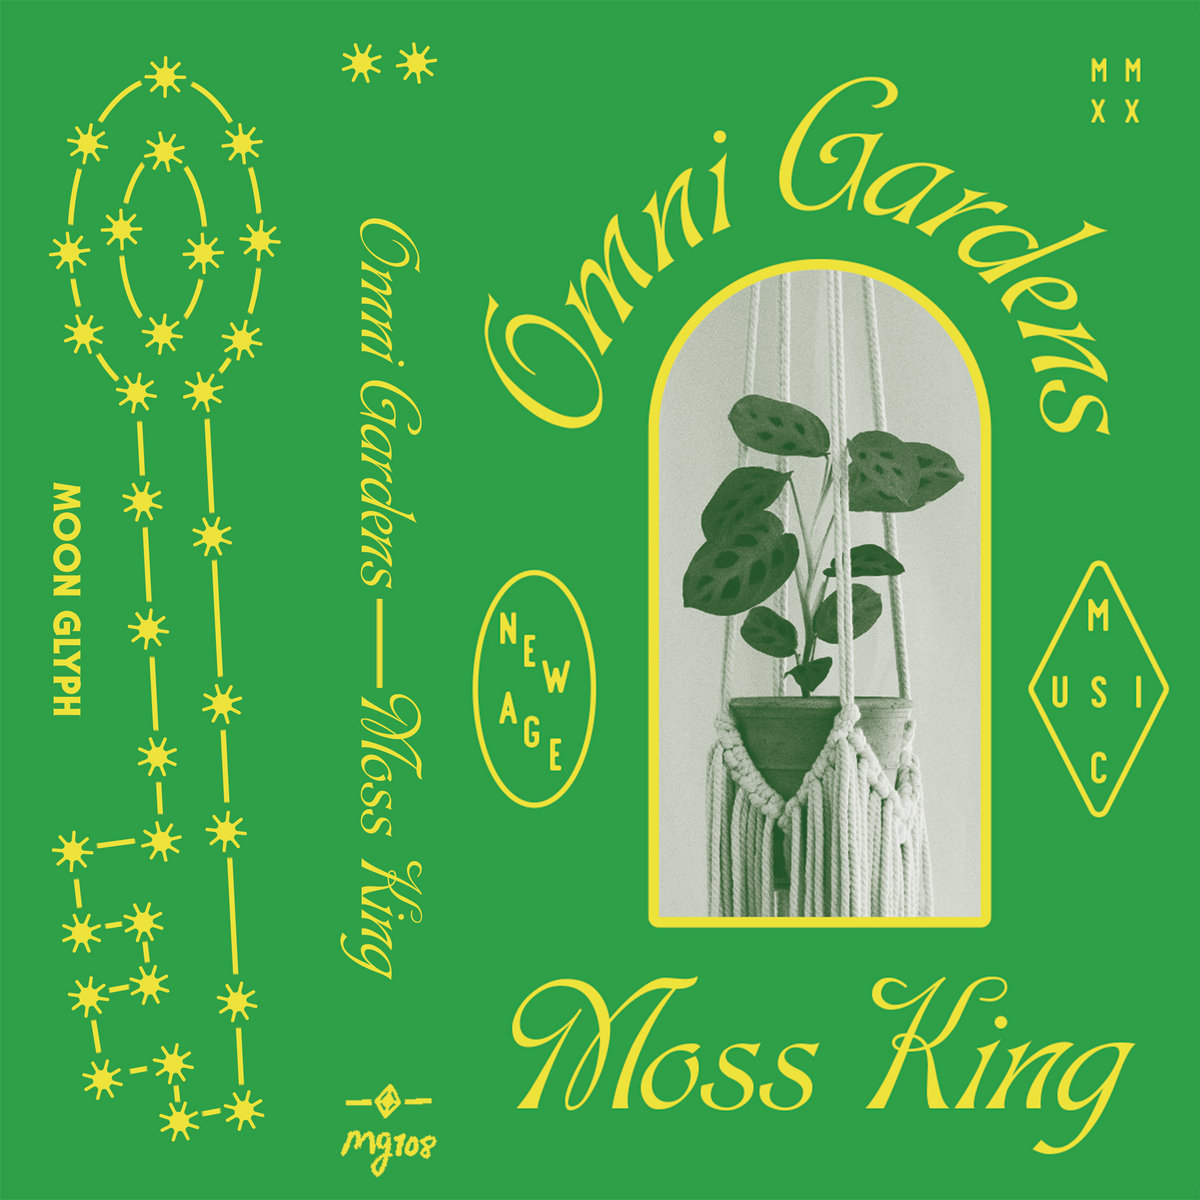 Moss King | Omni Gardens